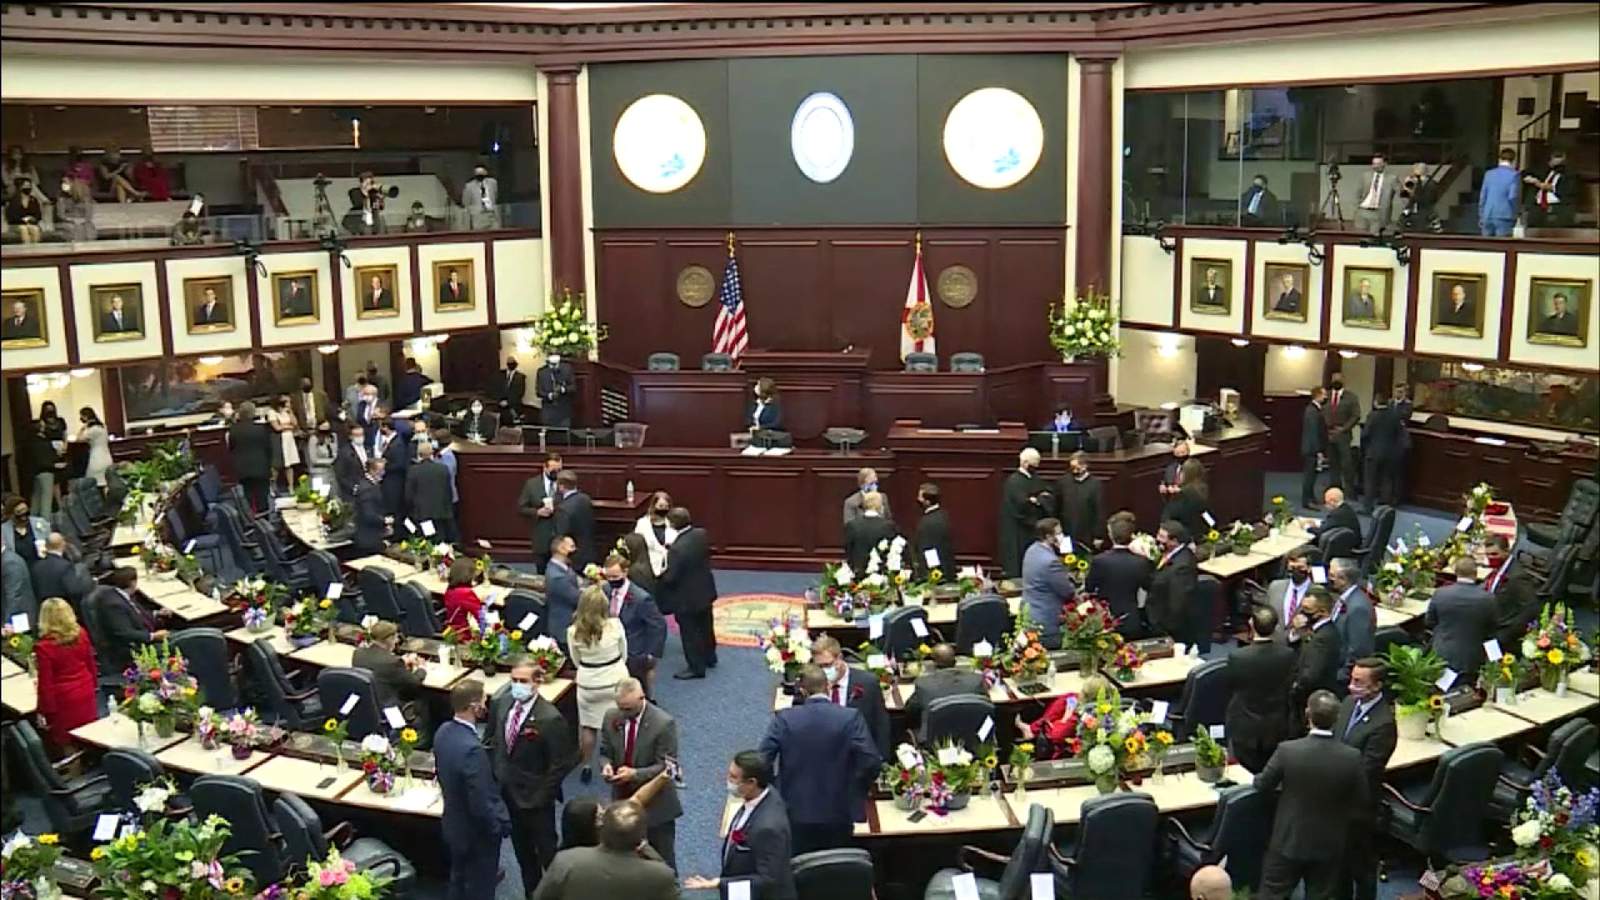 Florida Senate approves changes to public retirement system